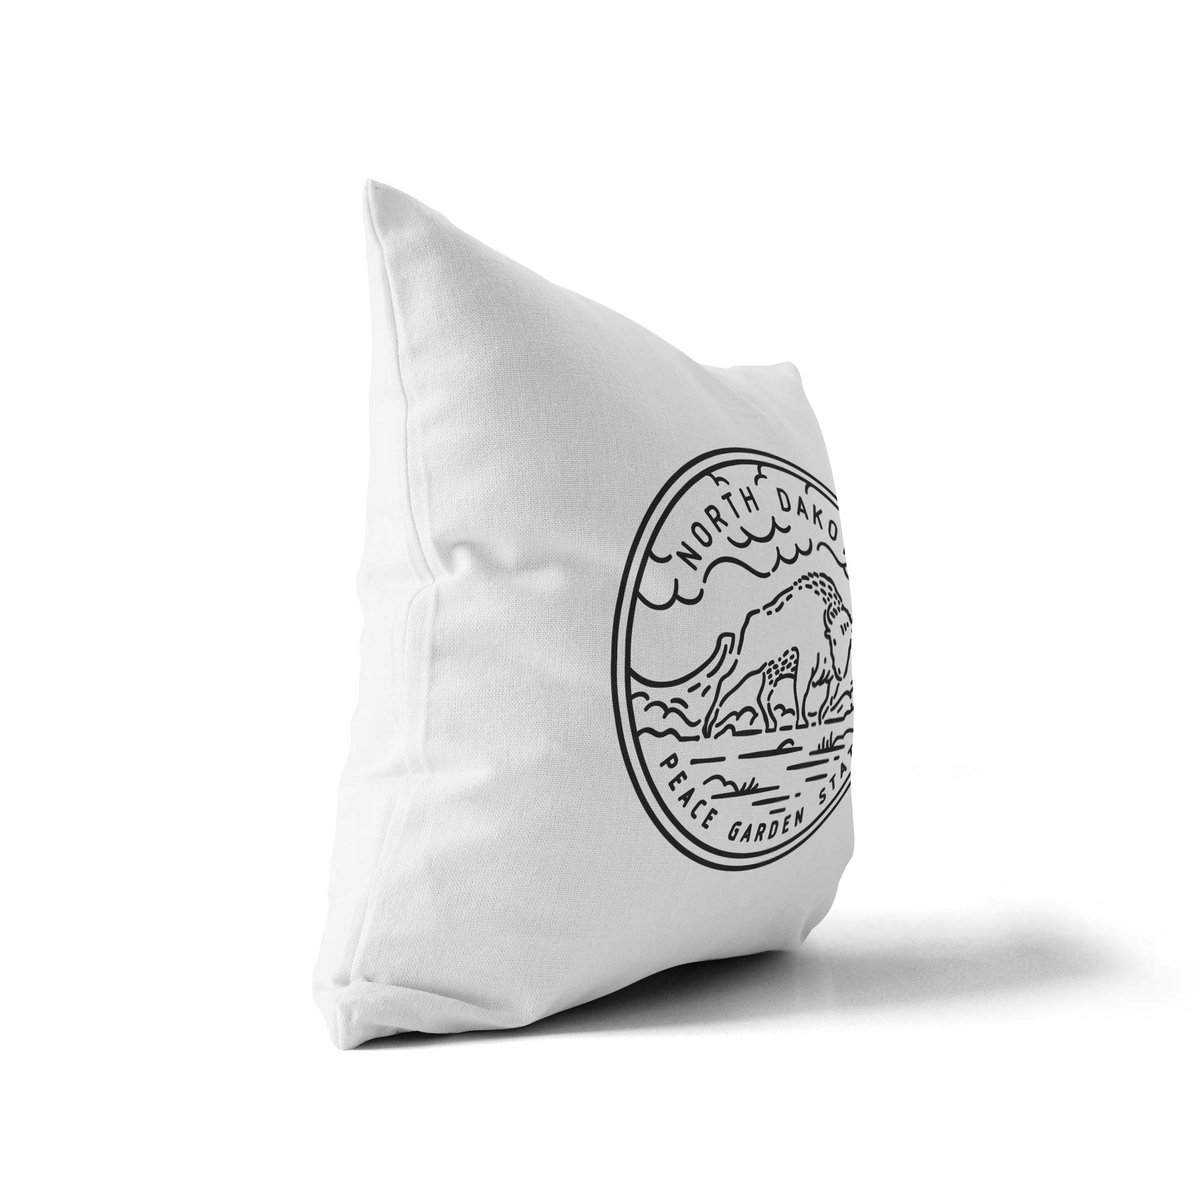 North Dakota State Crest Throw Pillow